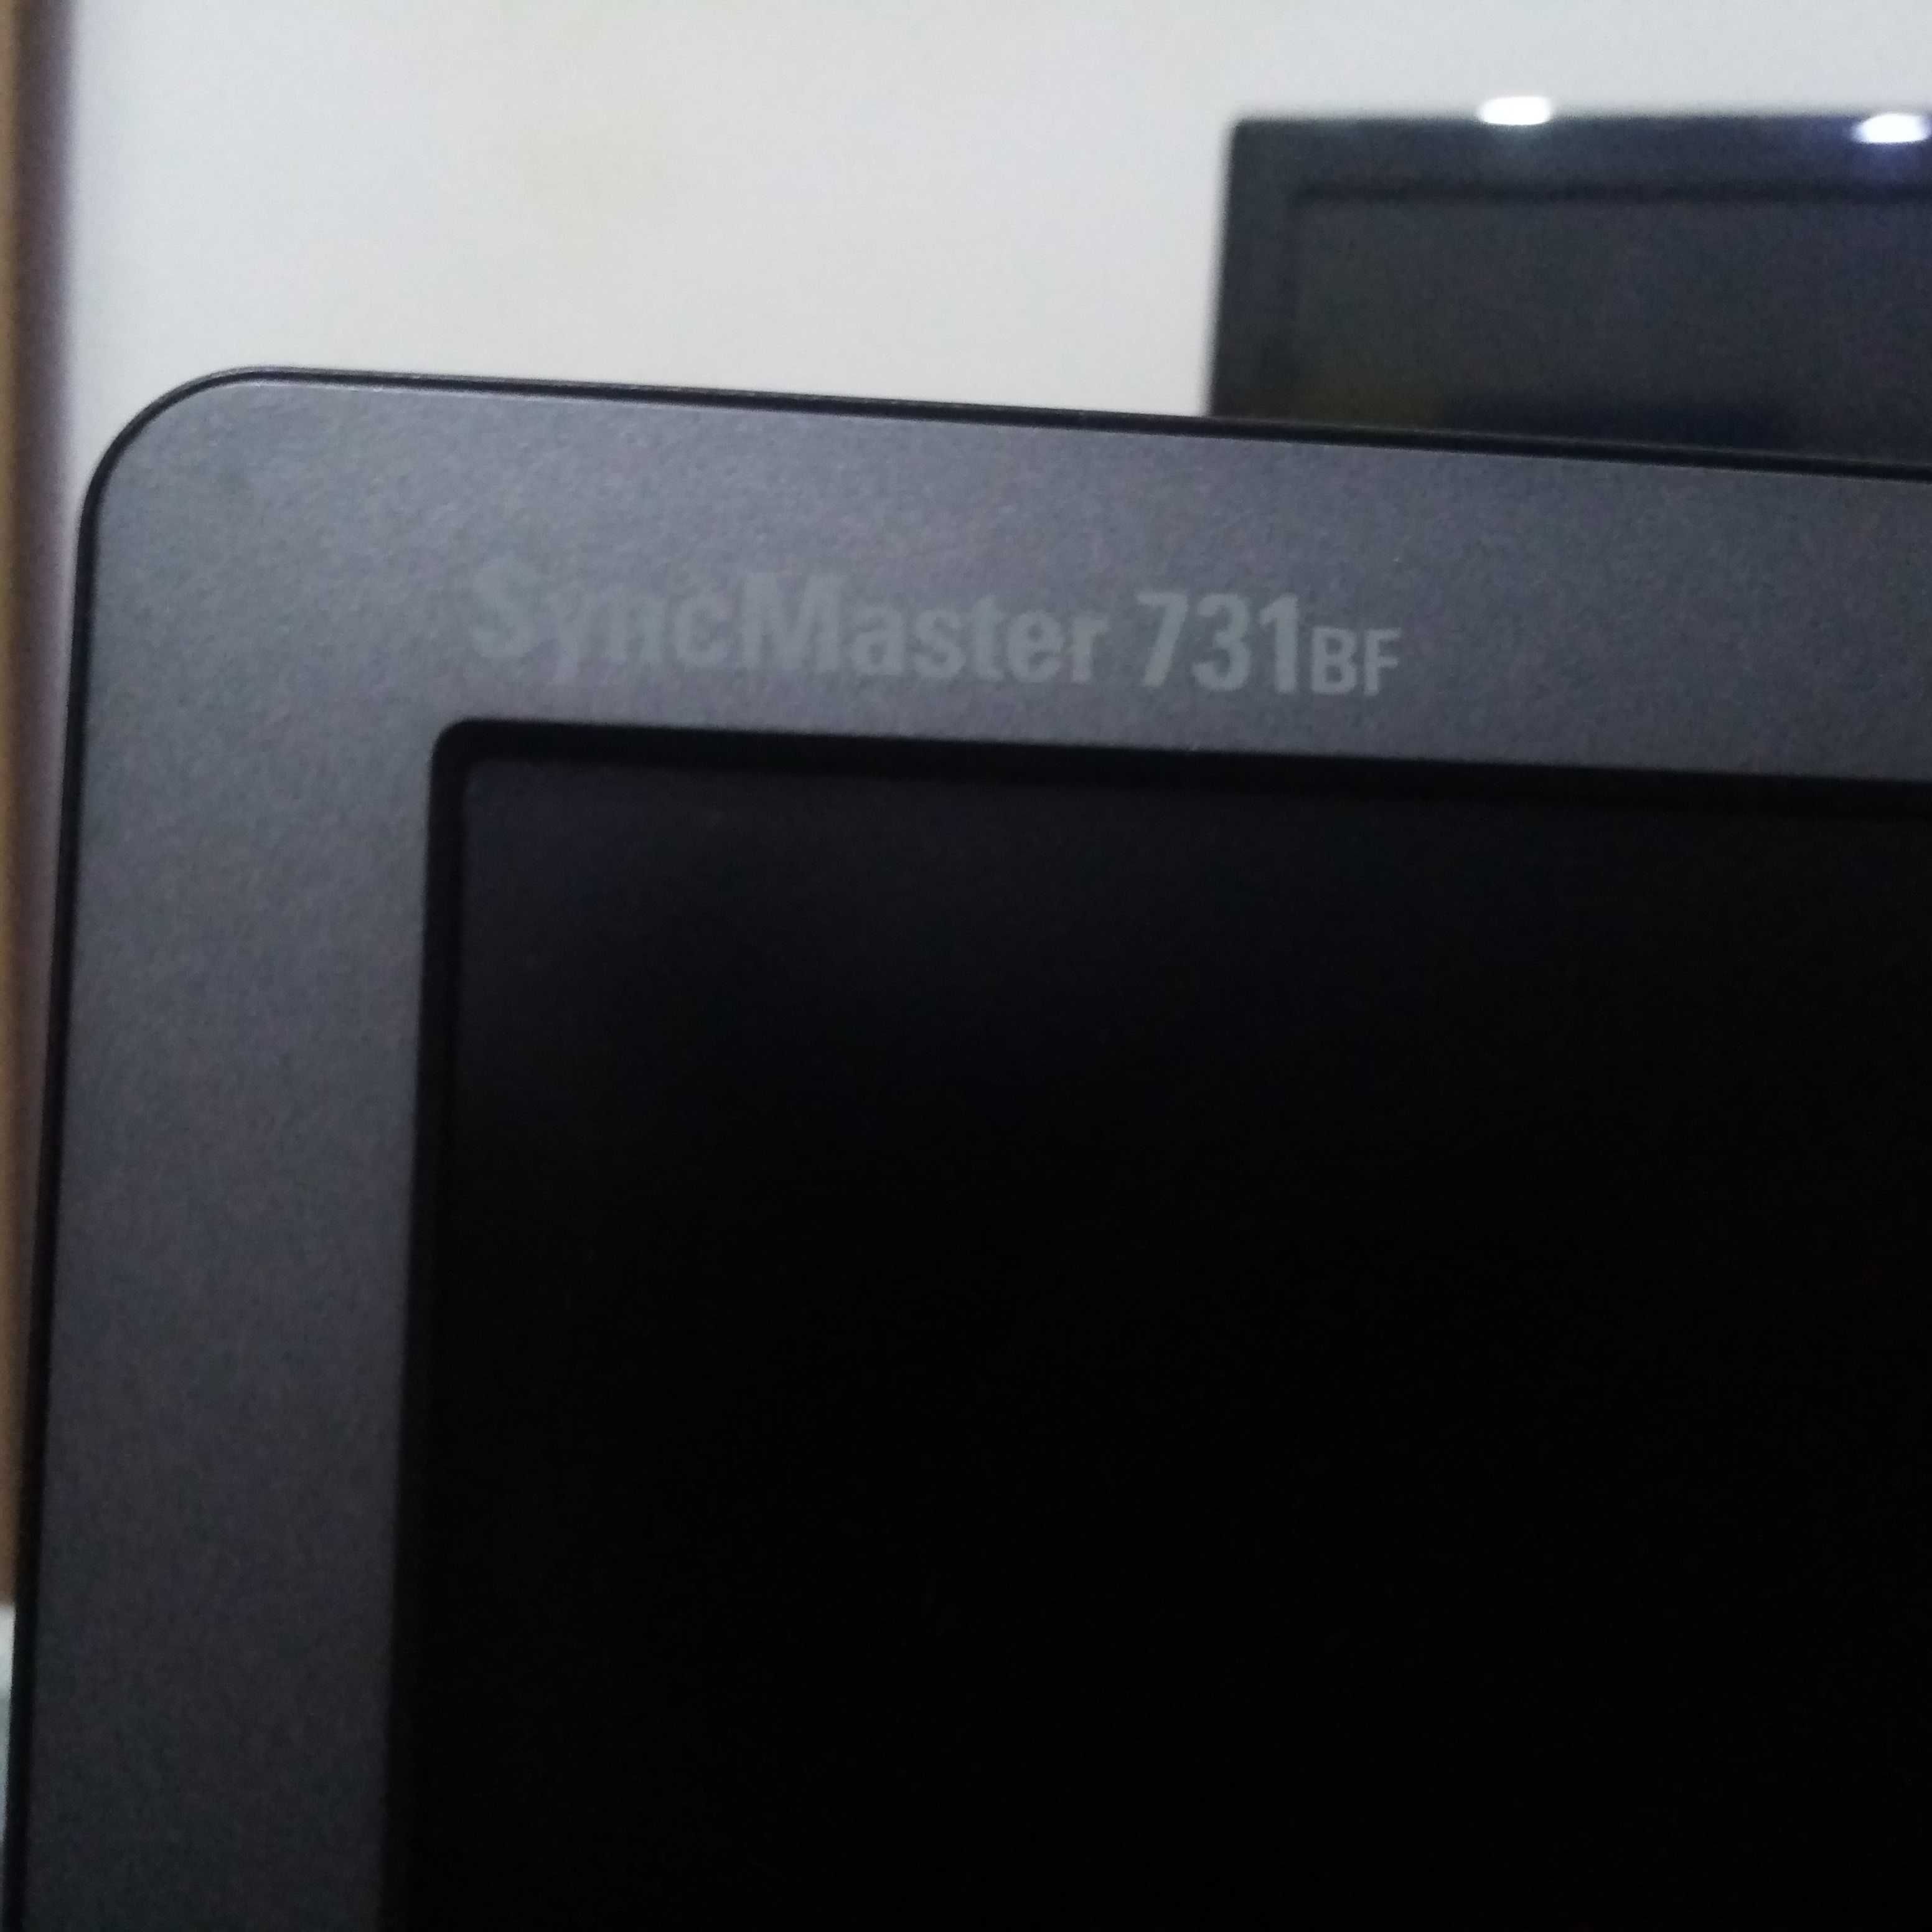 Monitor LCD Samsung SyncMaster 731BF 17 inch 2ms